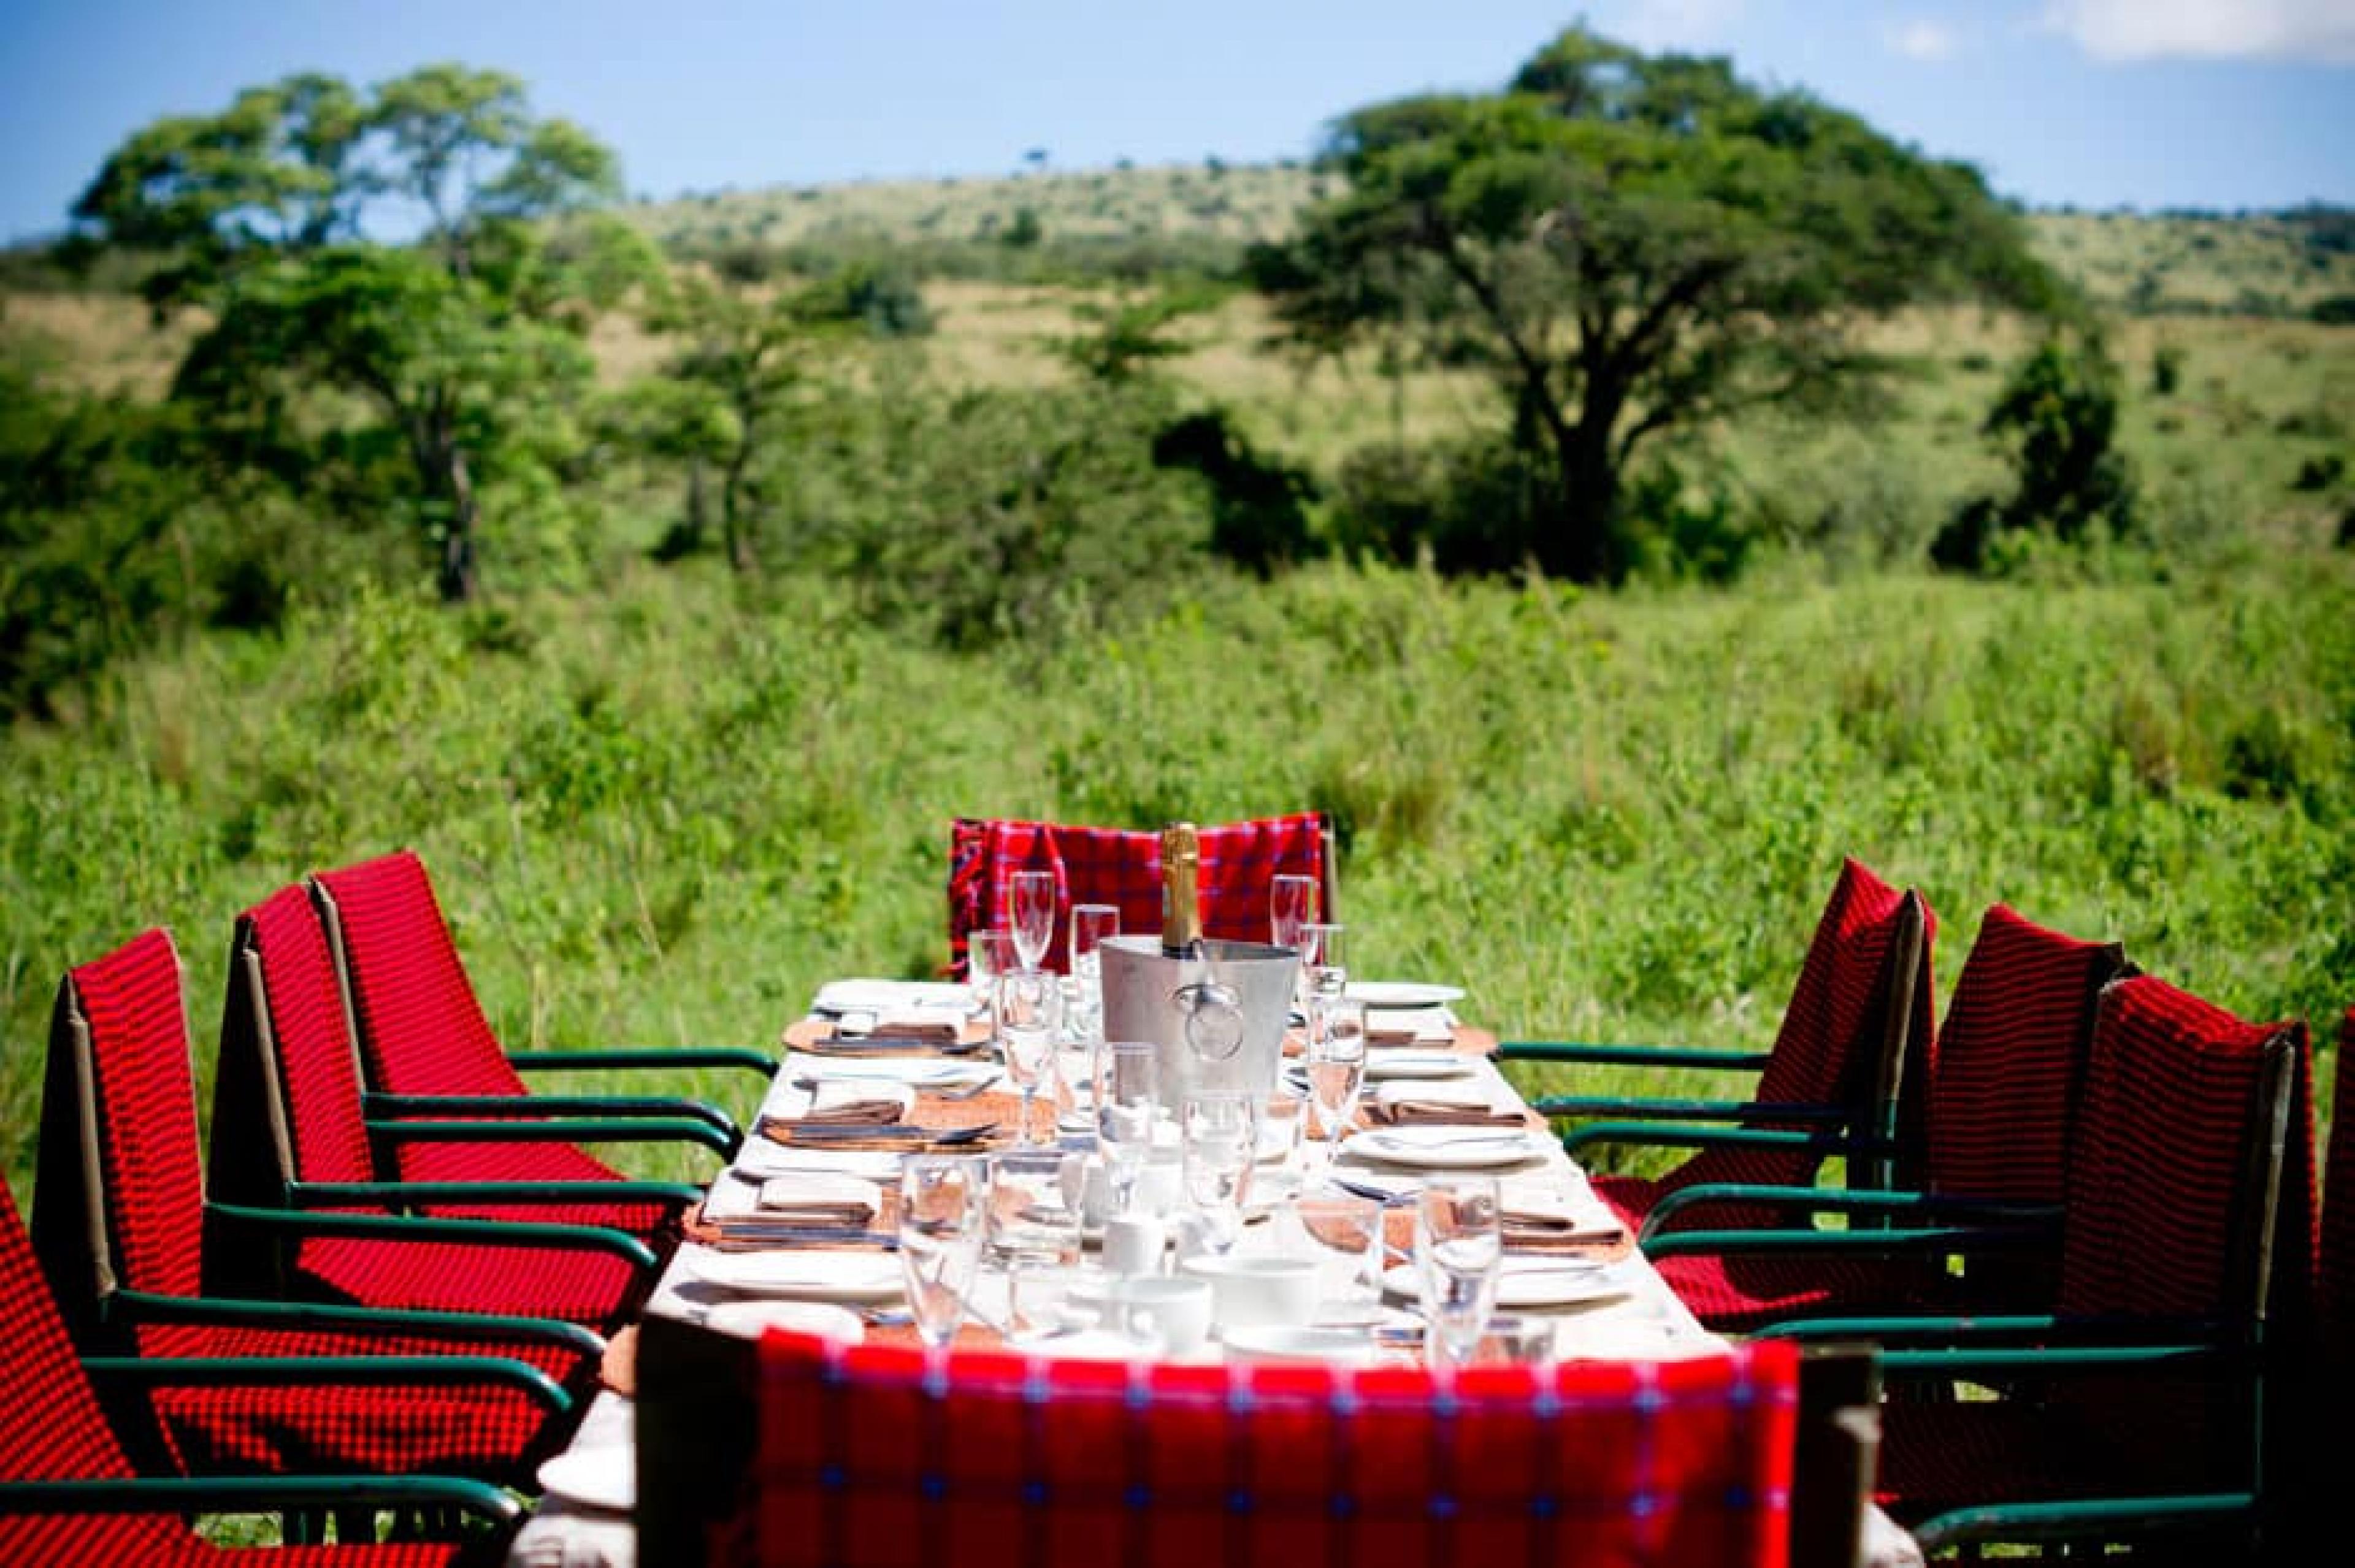 Dinning Area at Klein's Camp, Tanzania